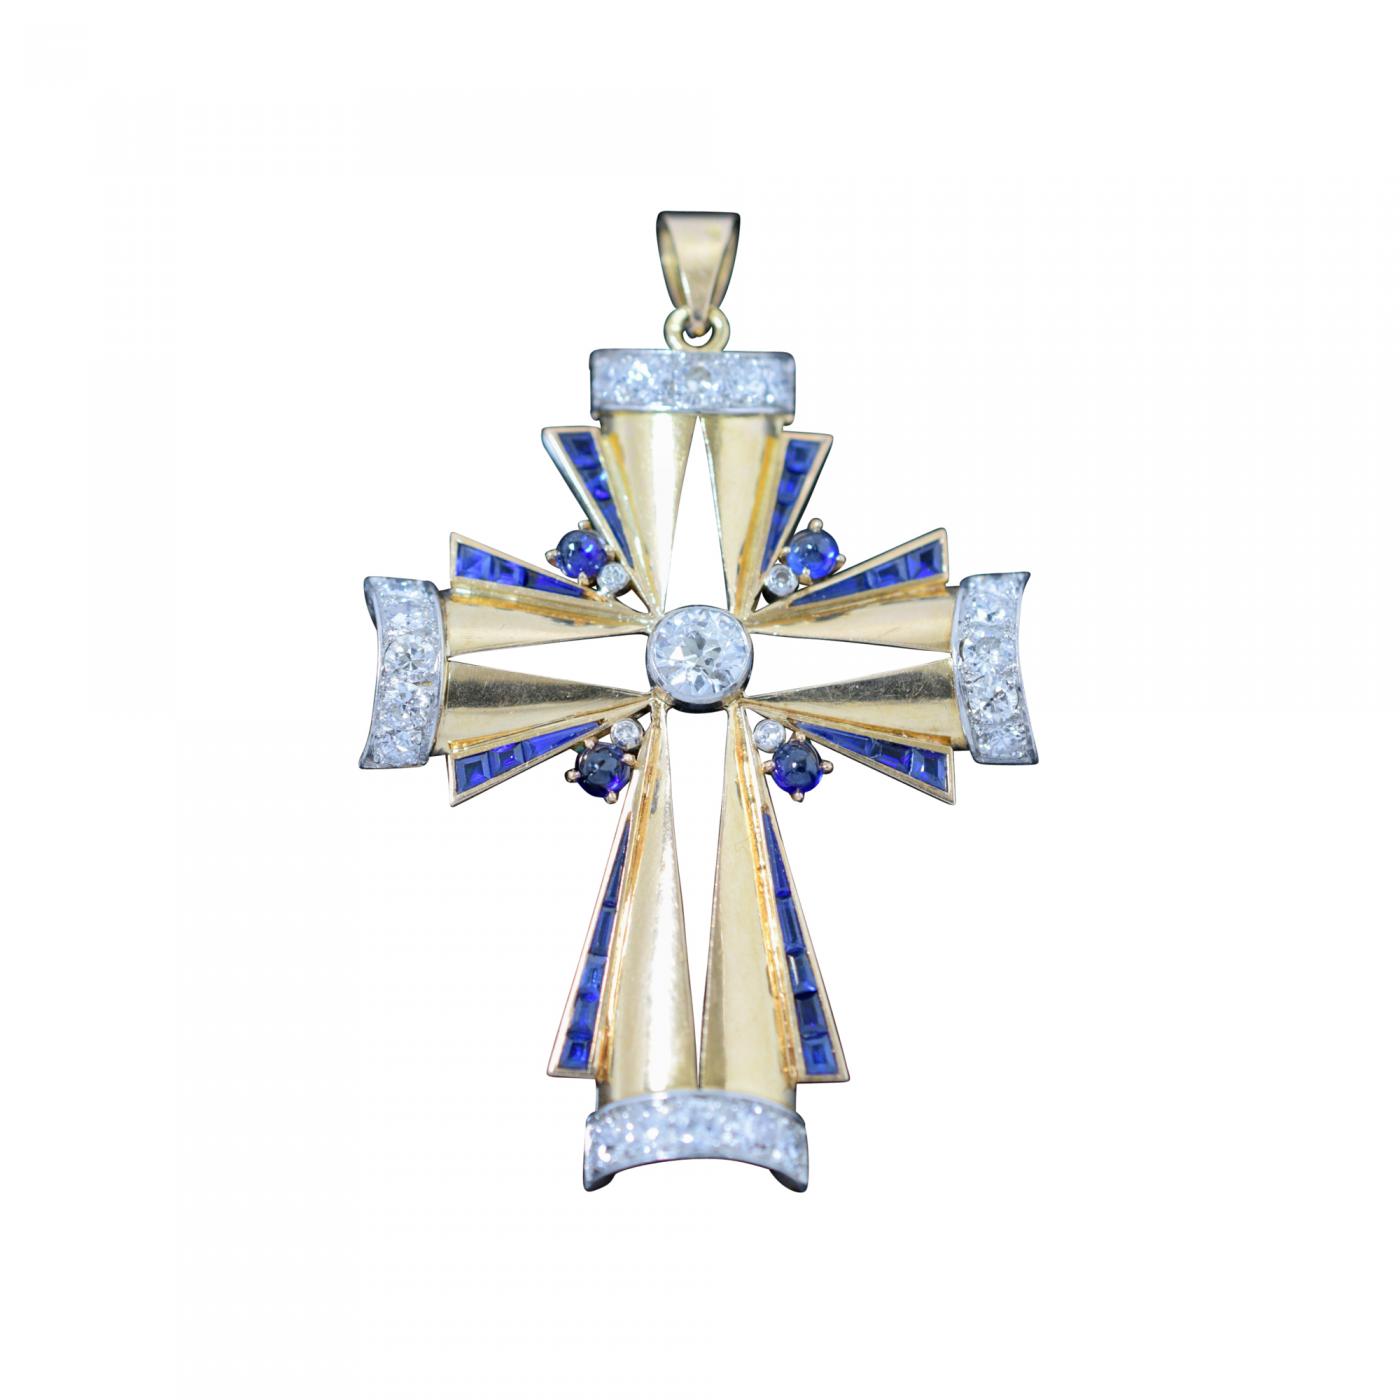 The Holy Bible / Biblical - Art Deco Jeweled Cross Pendant